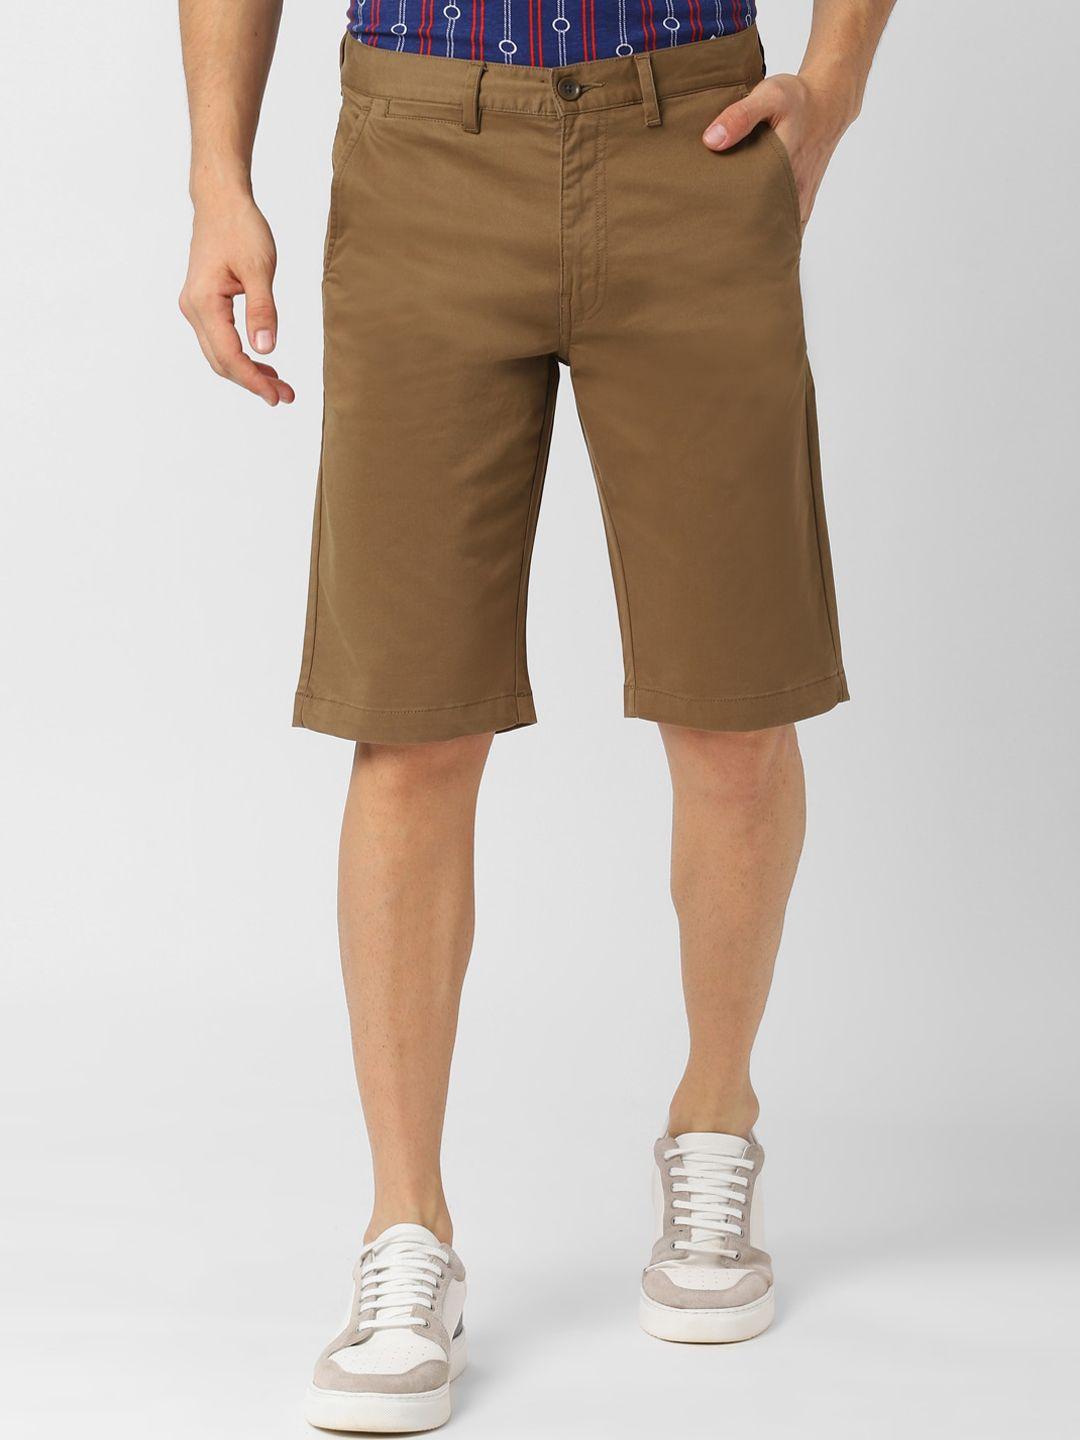 peter england casuals men khaki solid regular fit regular shorts